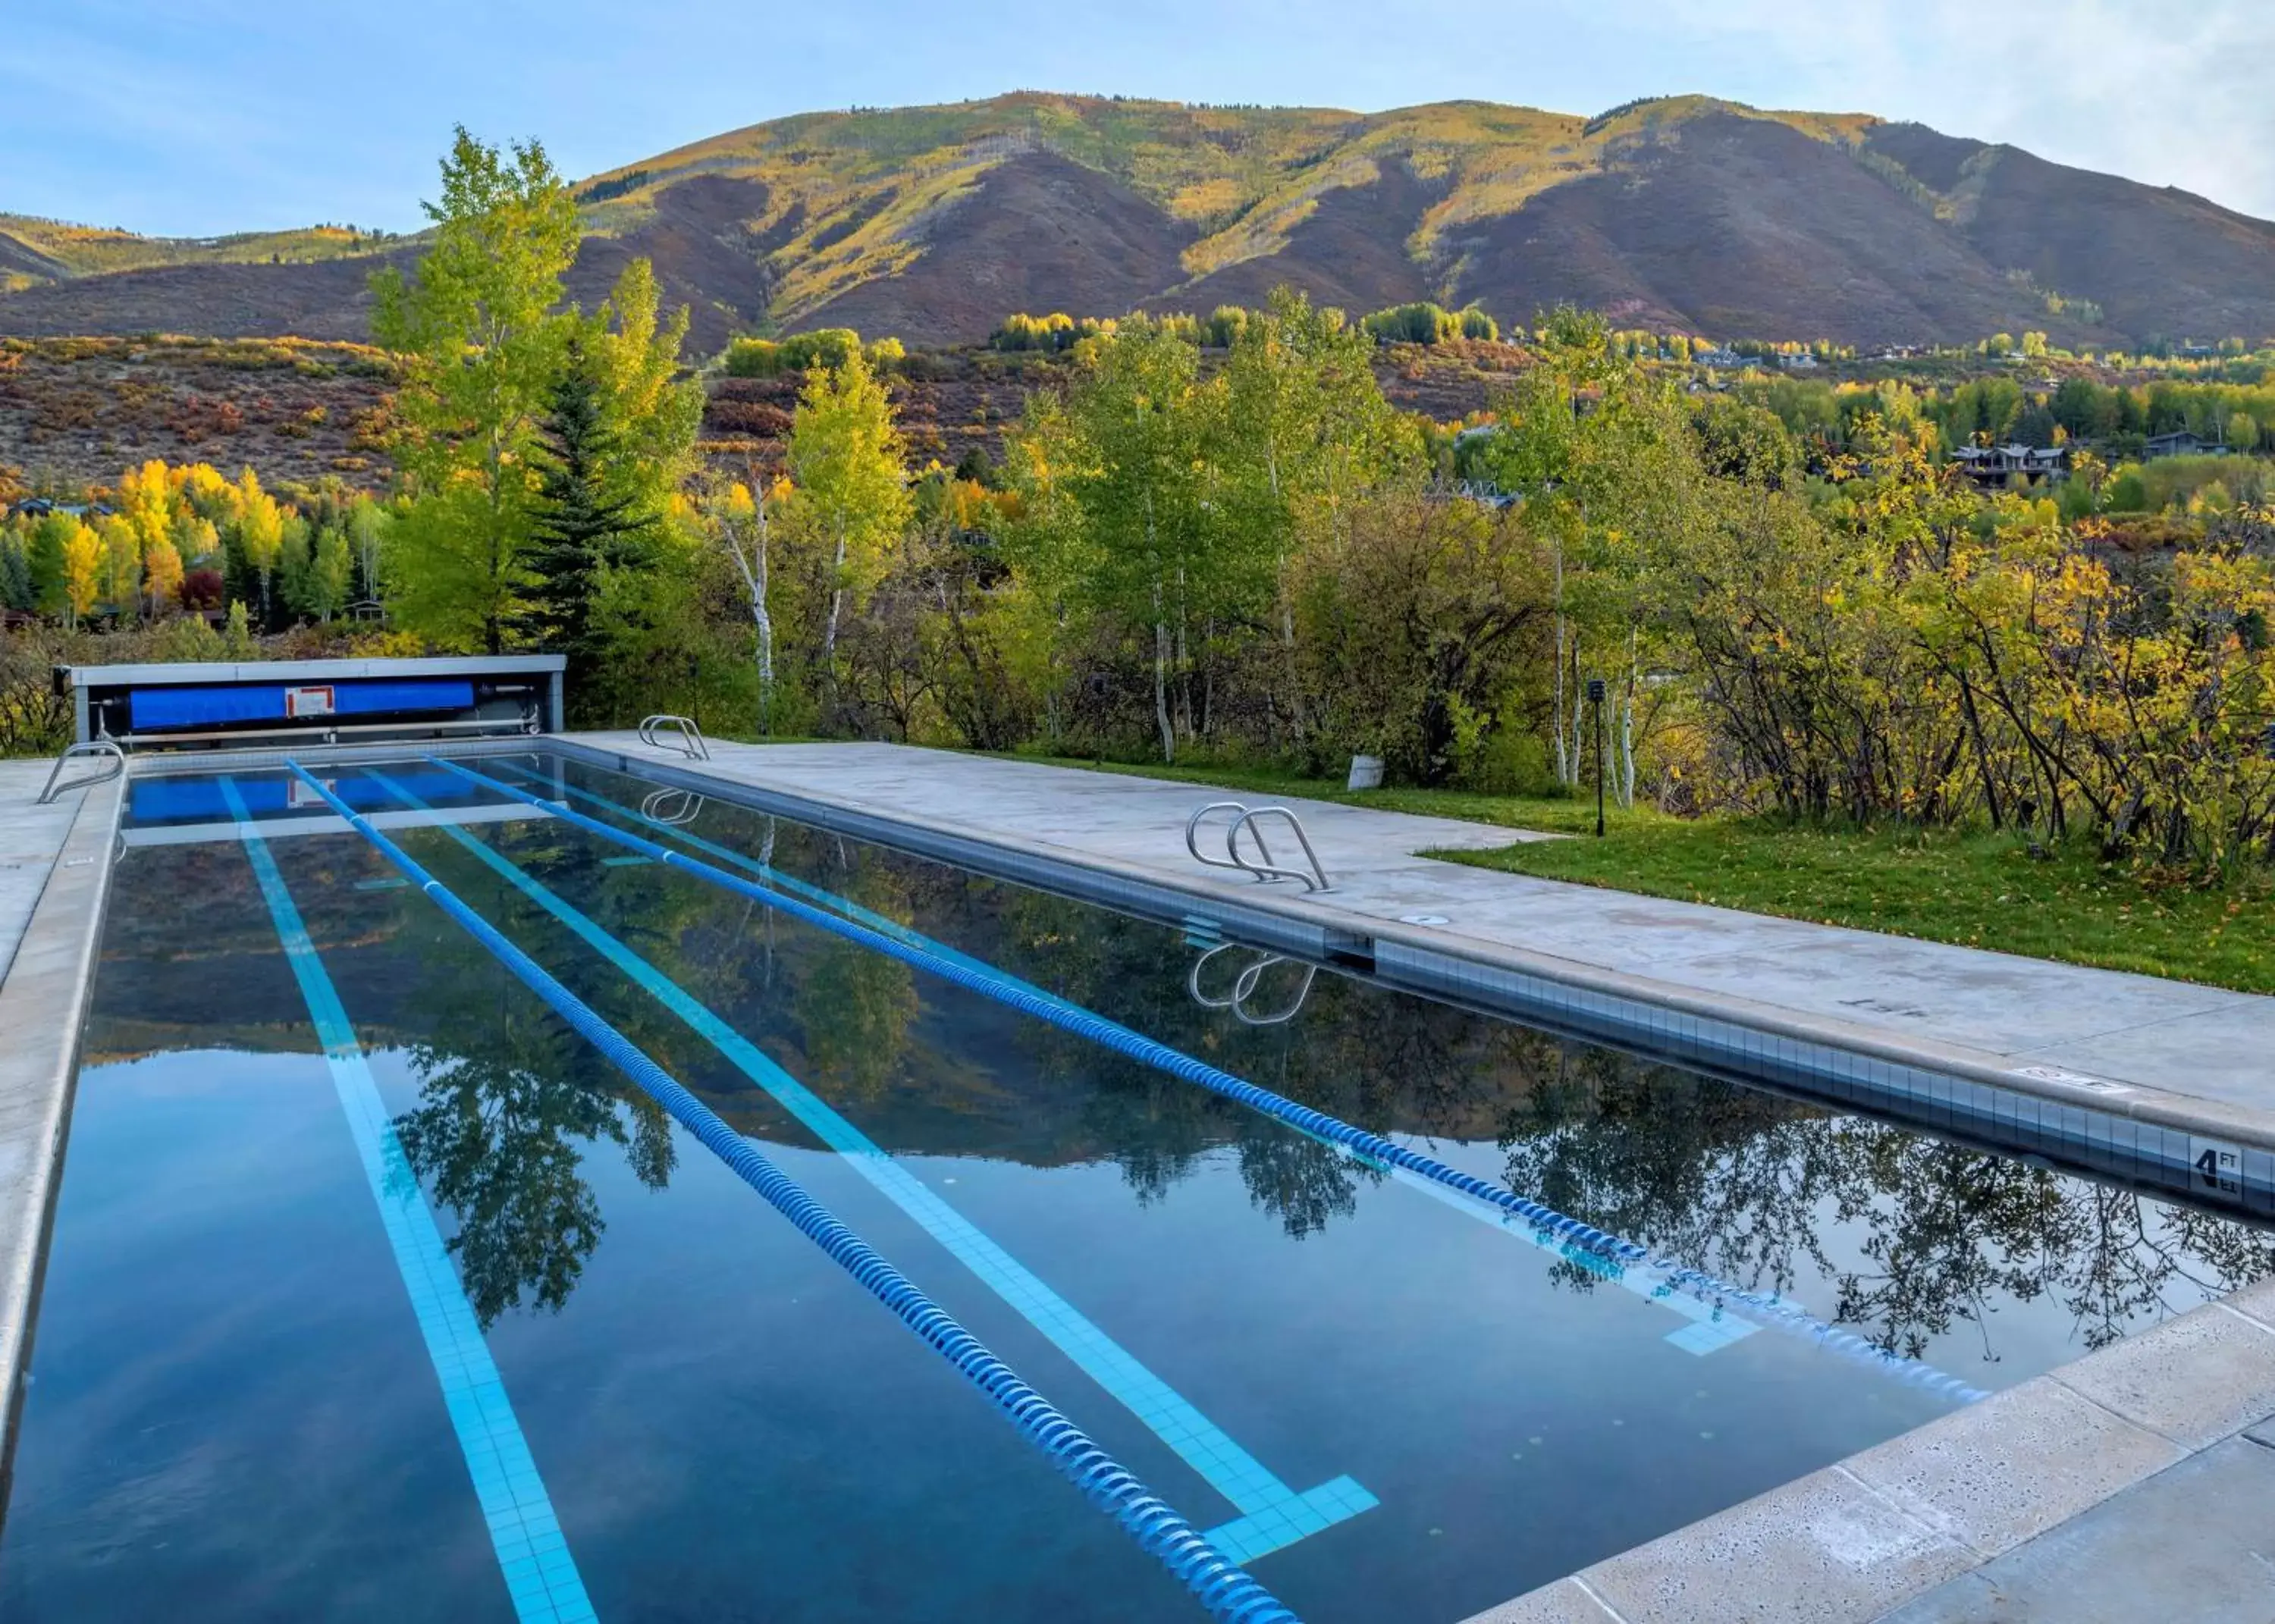 On site, Swimming Pool in Aspen Meadows Resort